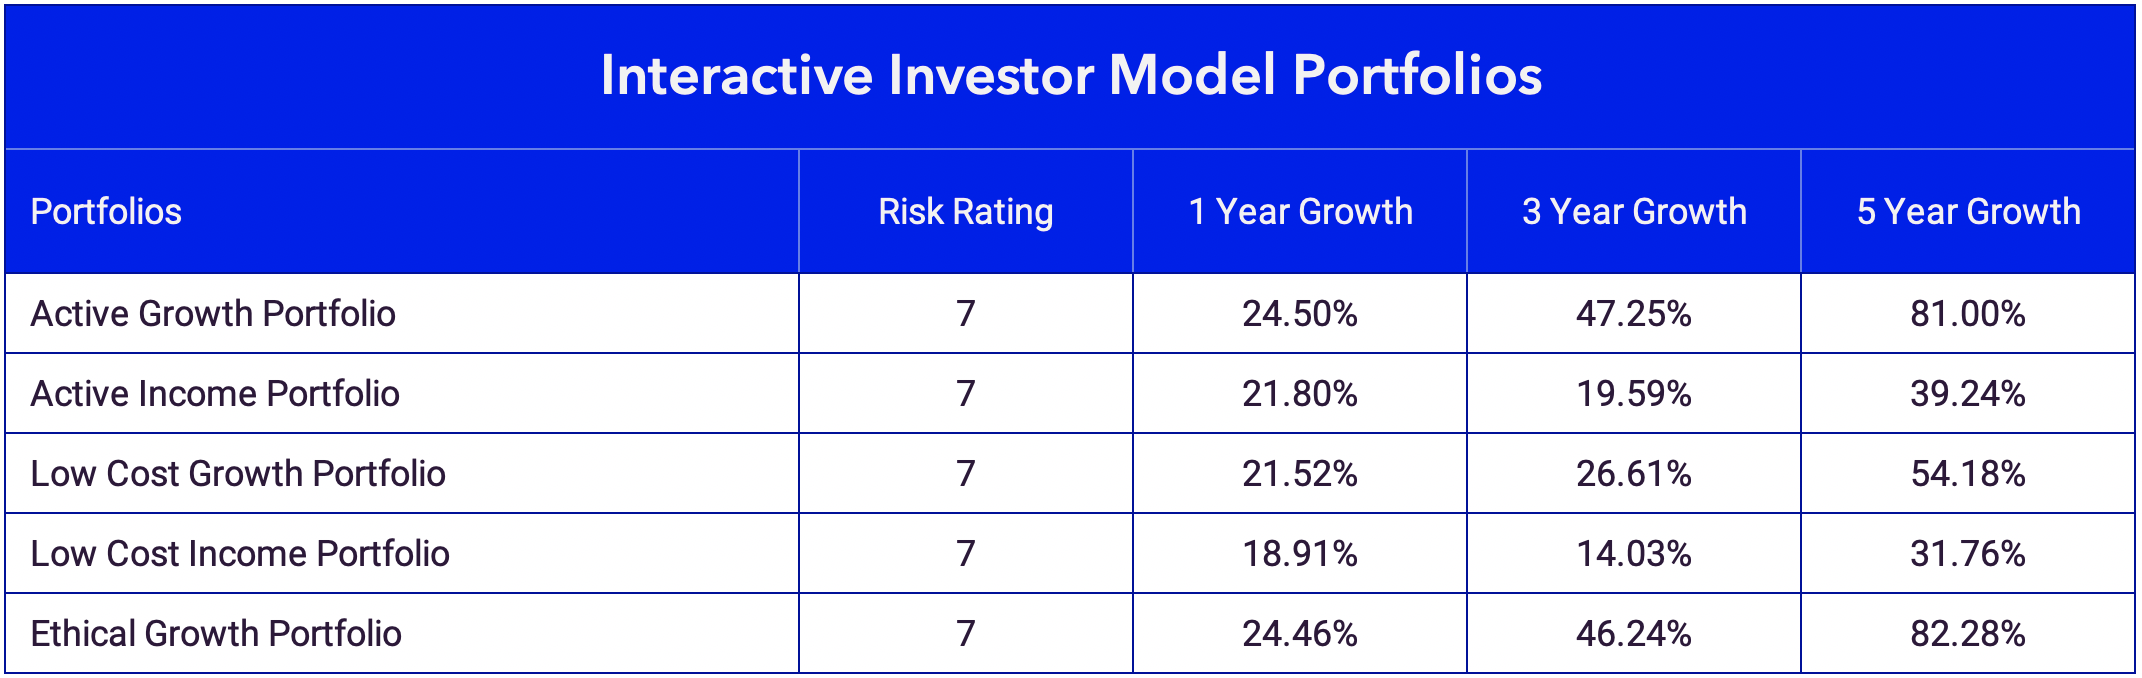 Interactive Investor Portfolios